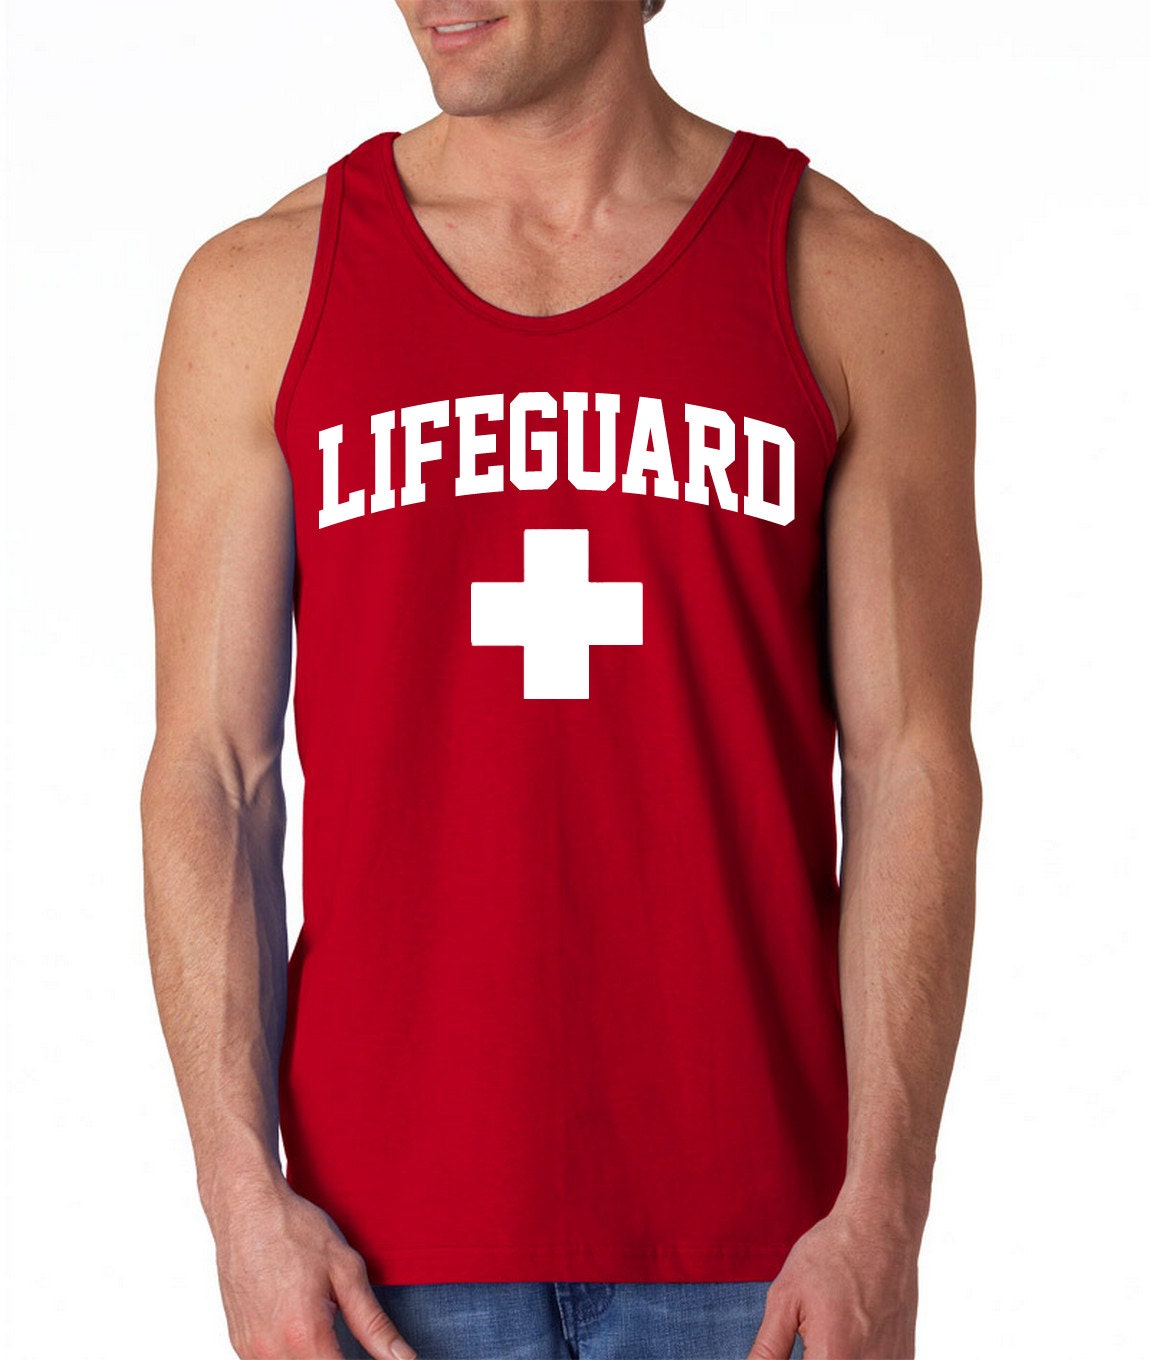 LifeGuard Sleeveless Tank Top swimming pool safety patrol